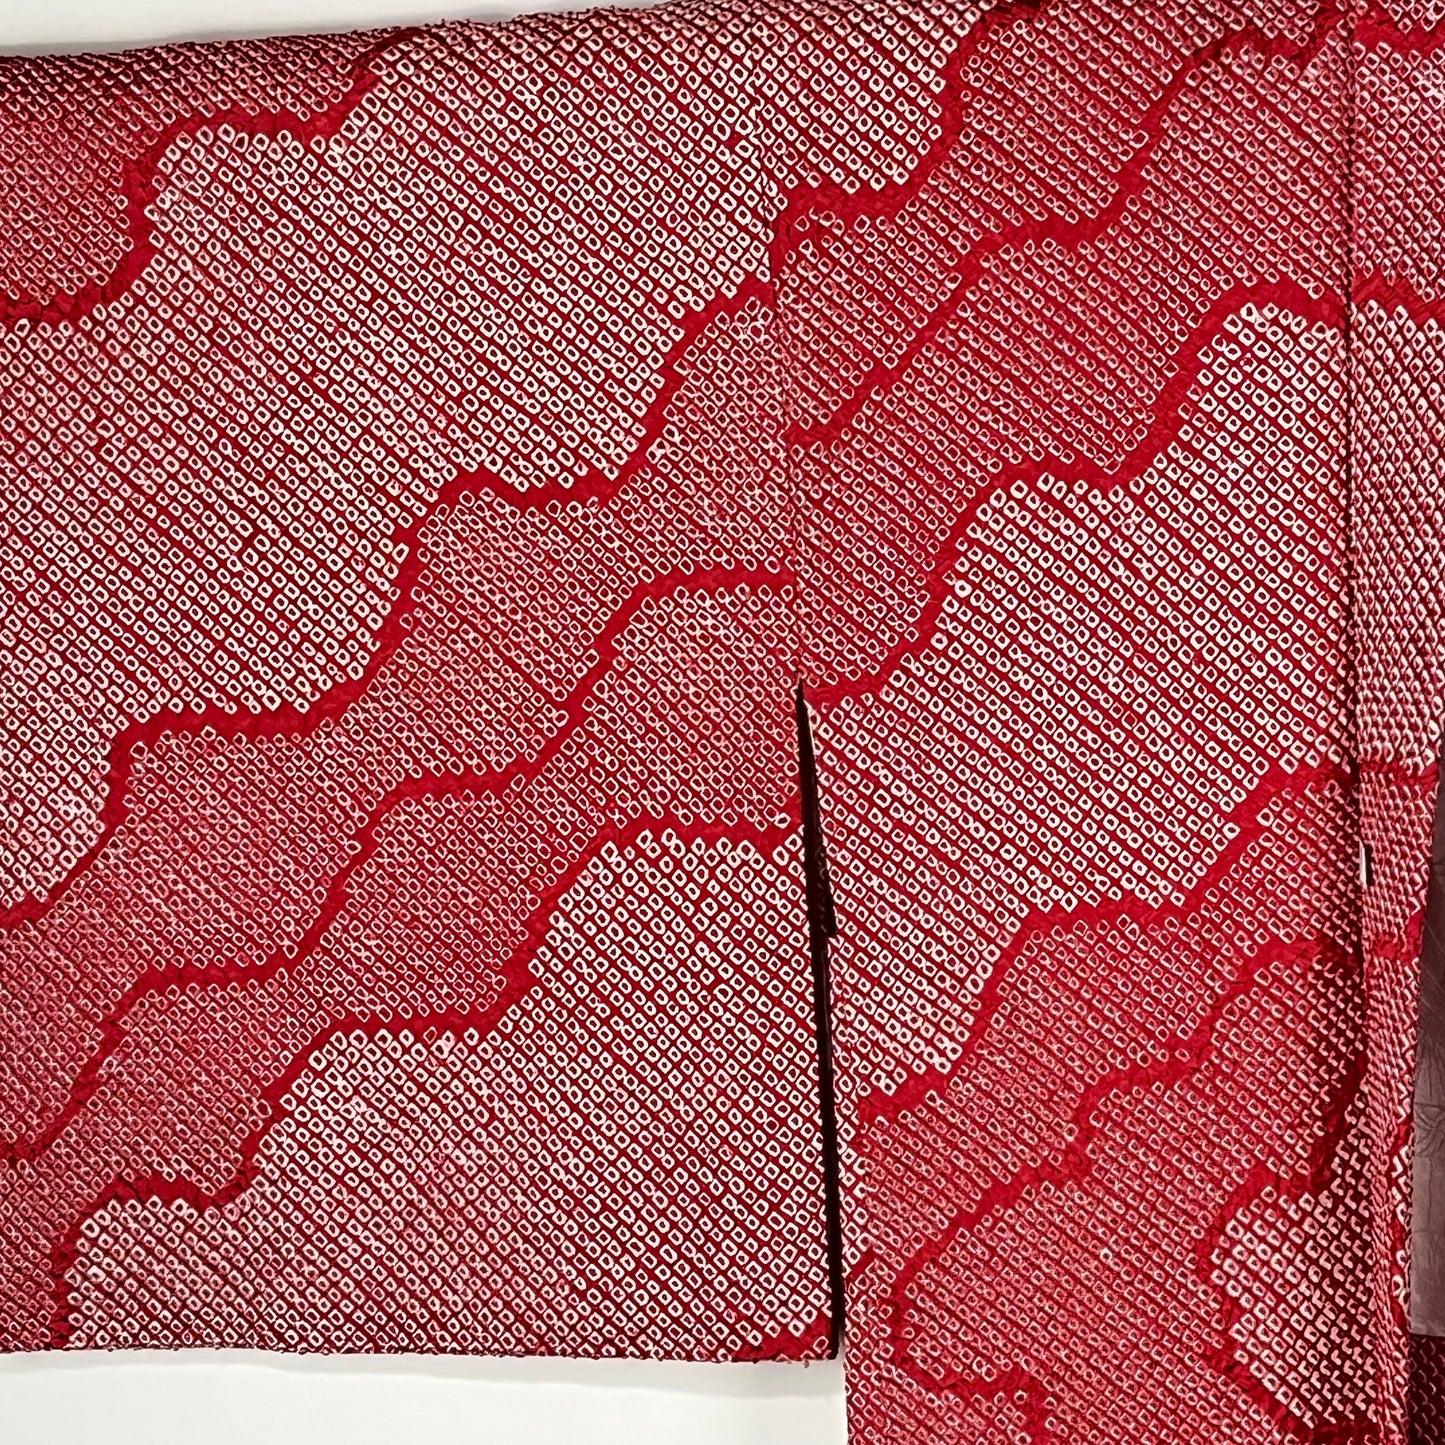 Vintage Japanese Silk Haori Coat in Shibori Tie-dye Bright Red Wavy Pattern 28"L